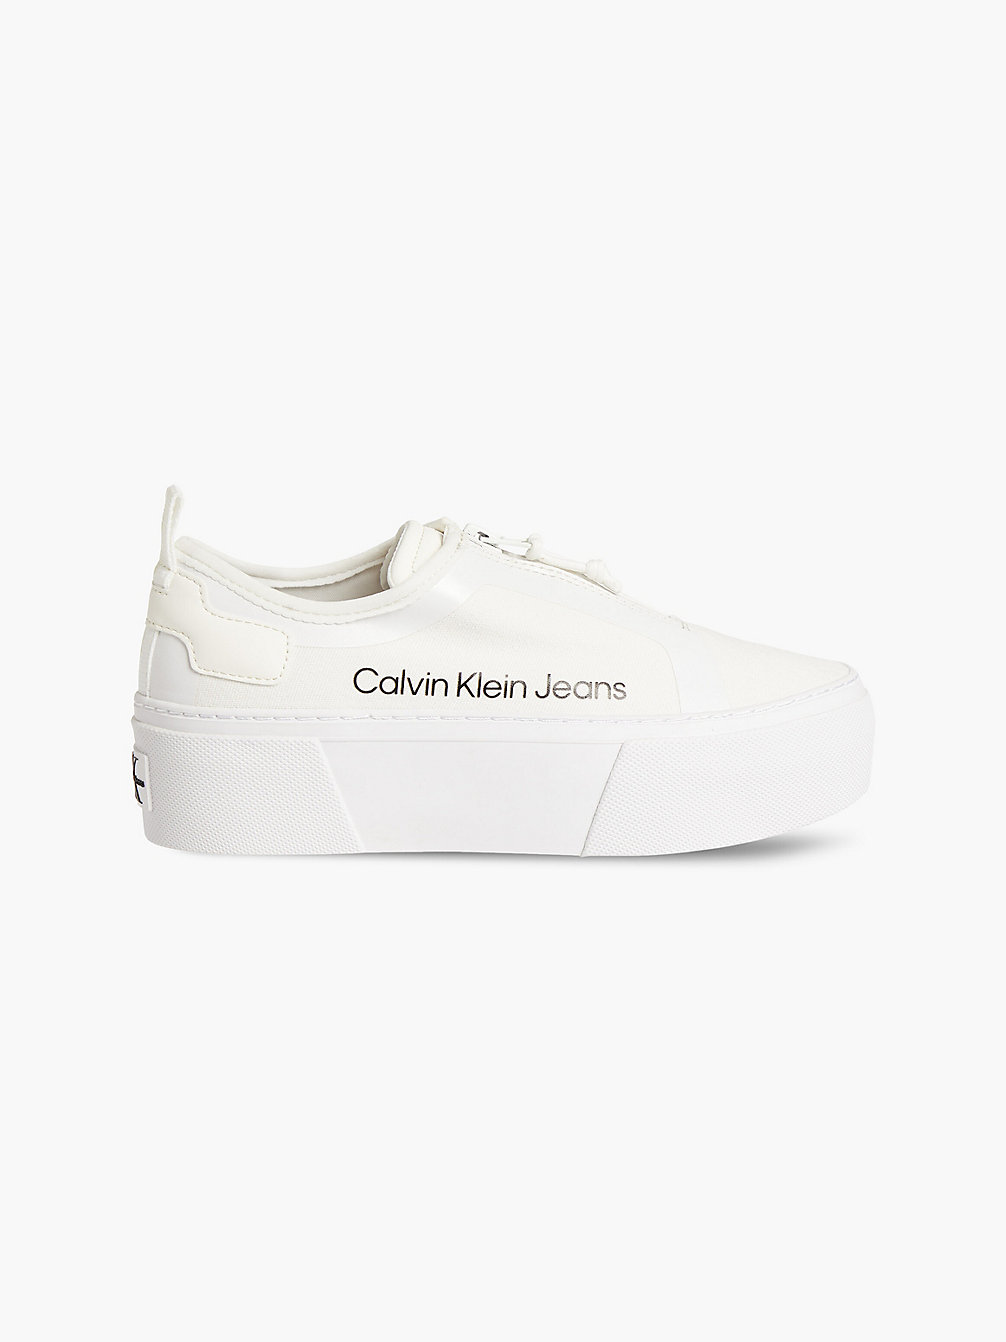 WHITE/OFFWHITE > Кроссовки с молнией на платформе из переработанной парус > undefined Женщины - Calvin Klein